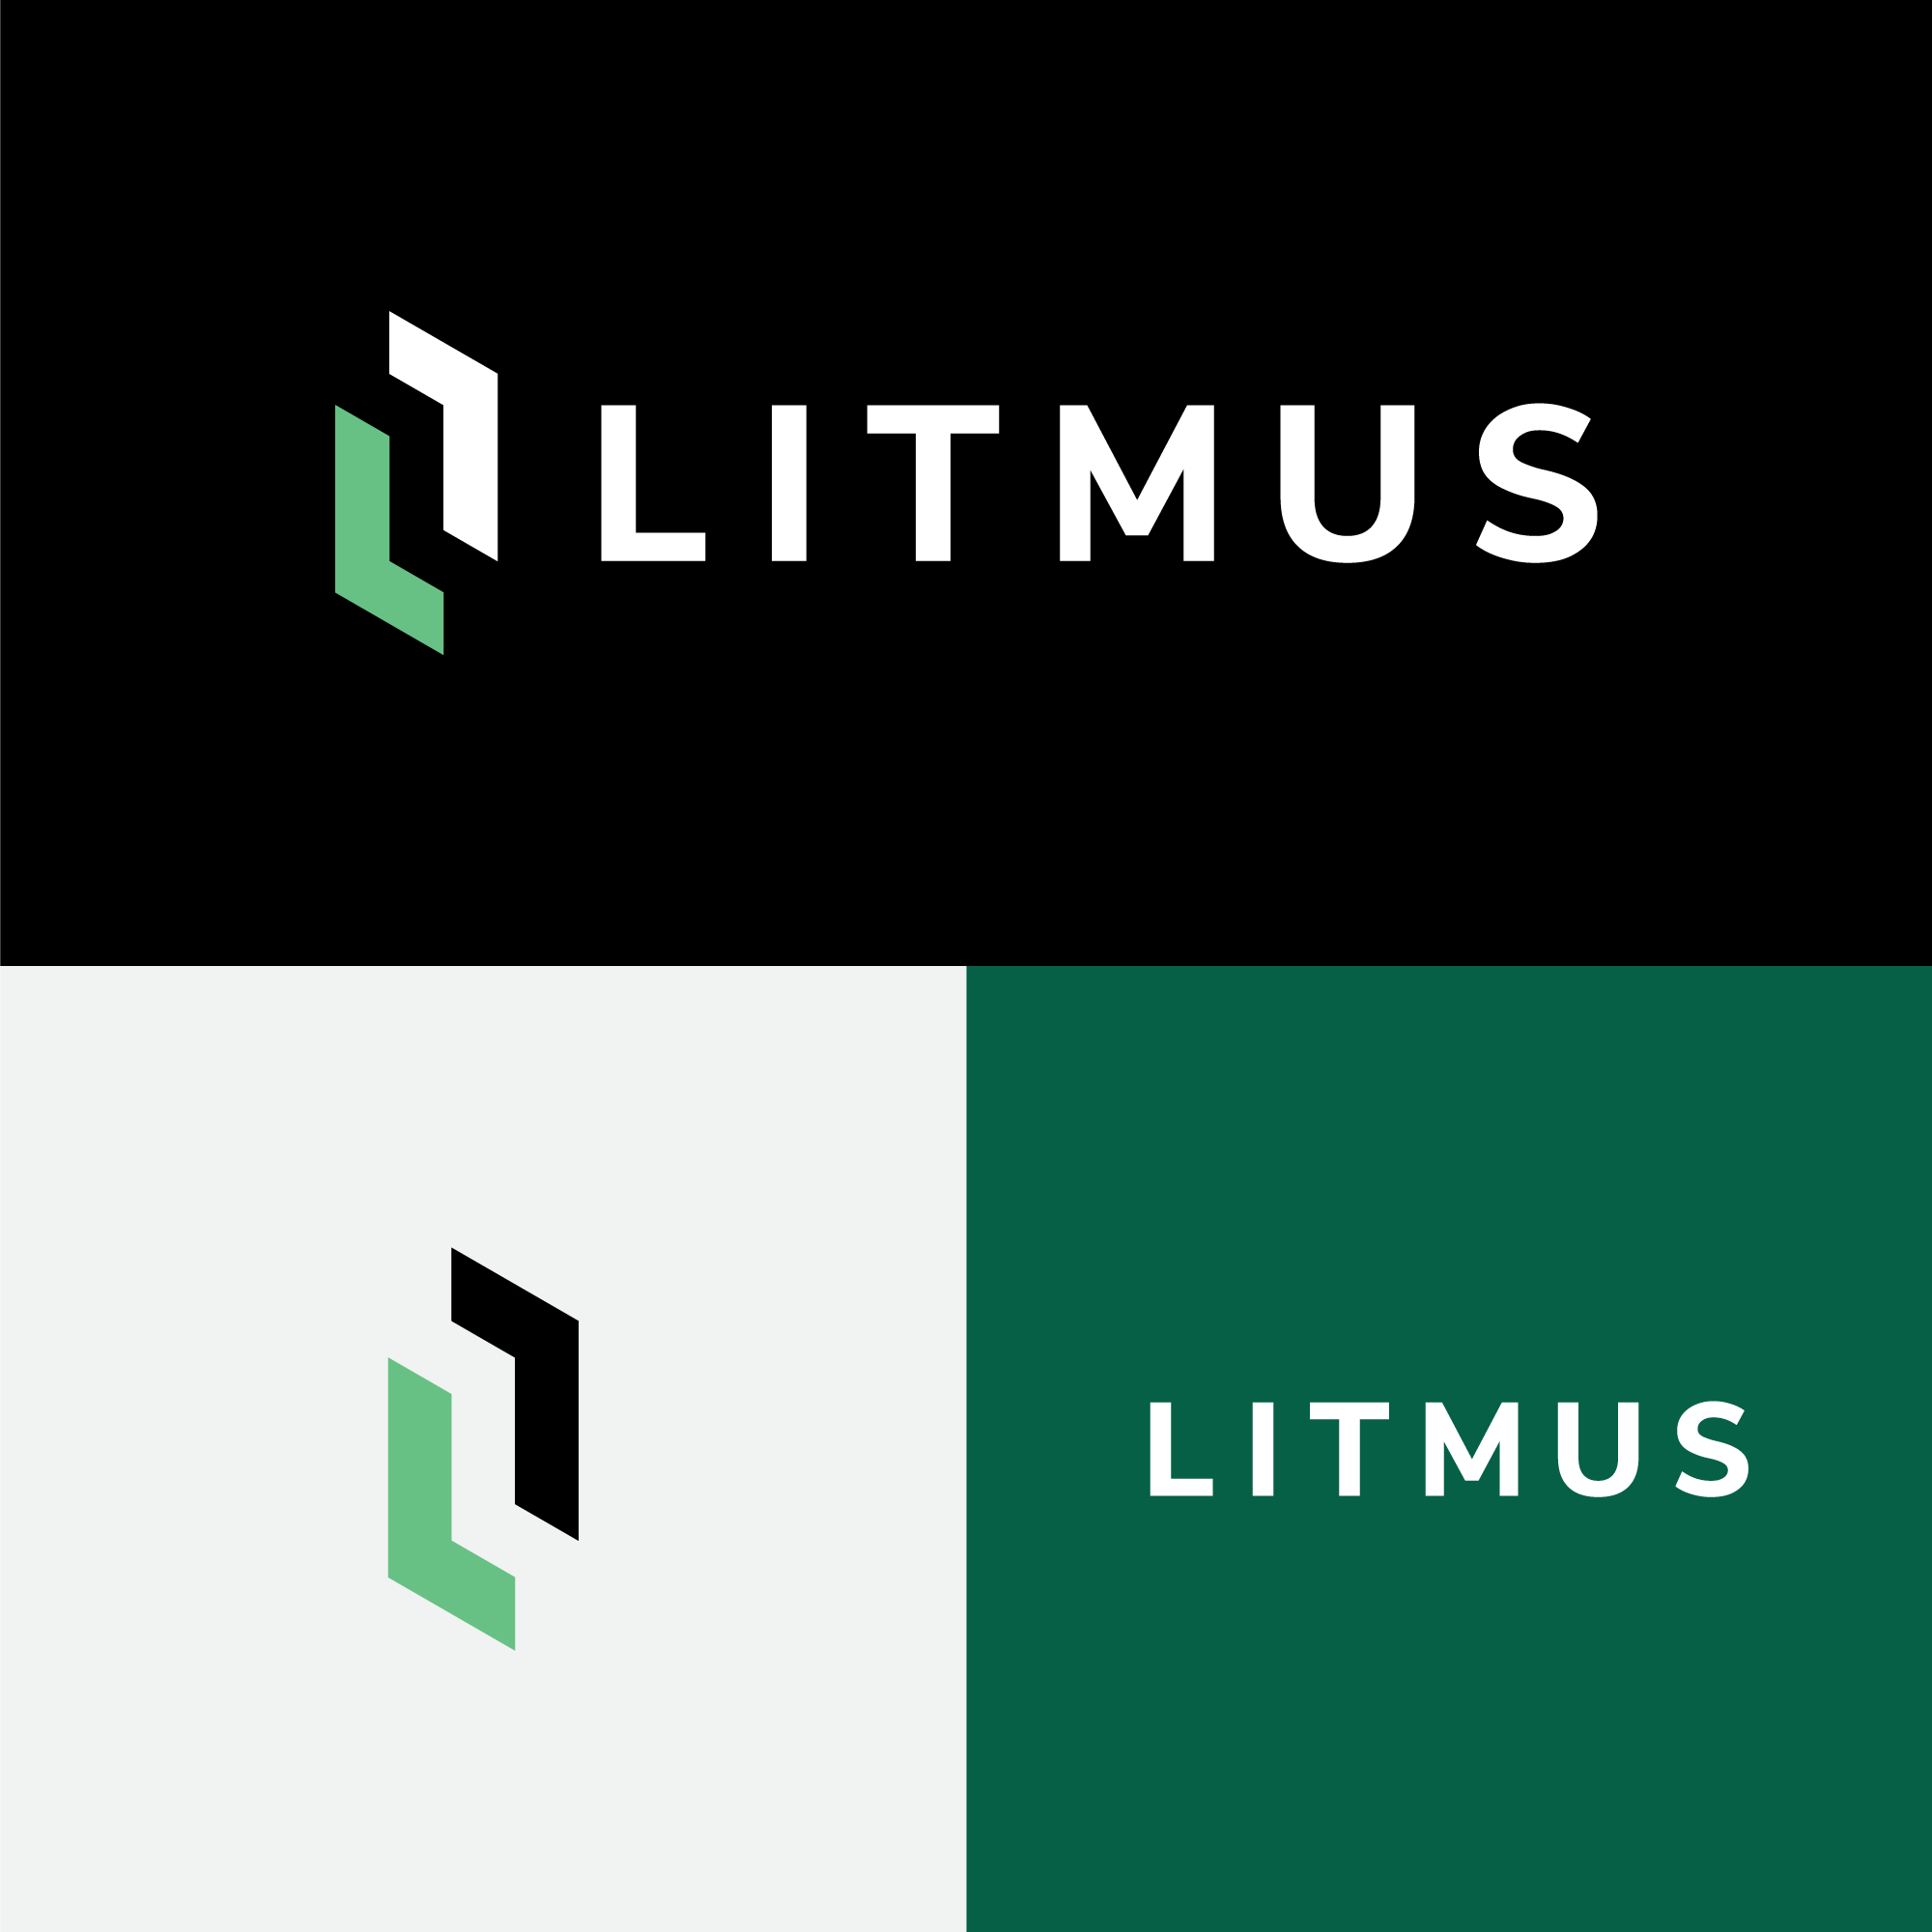 Litmus building design